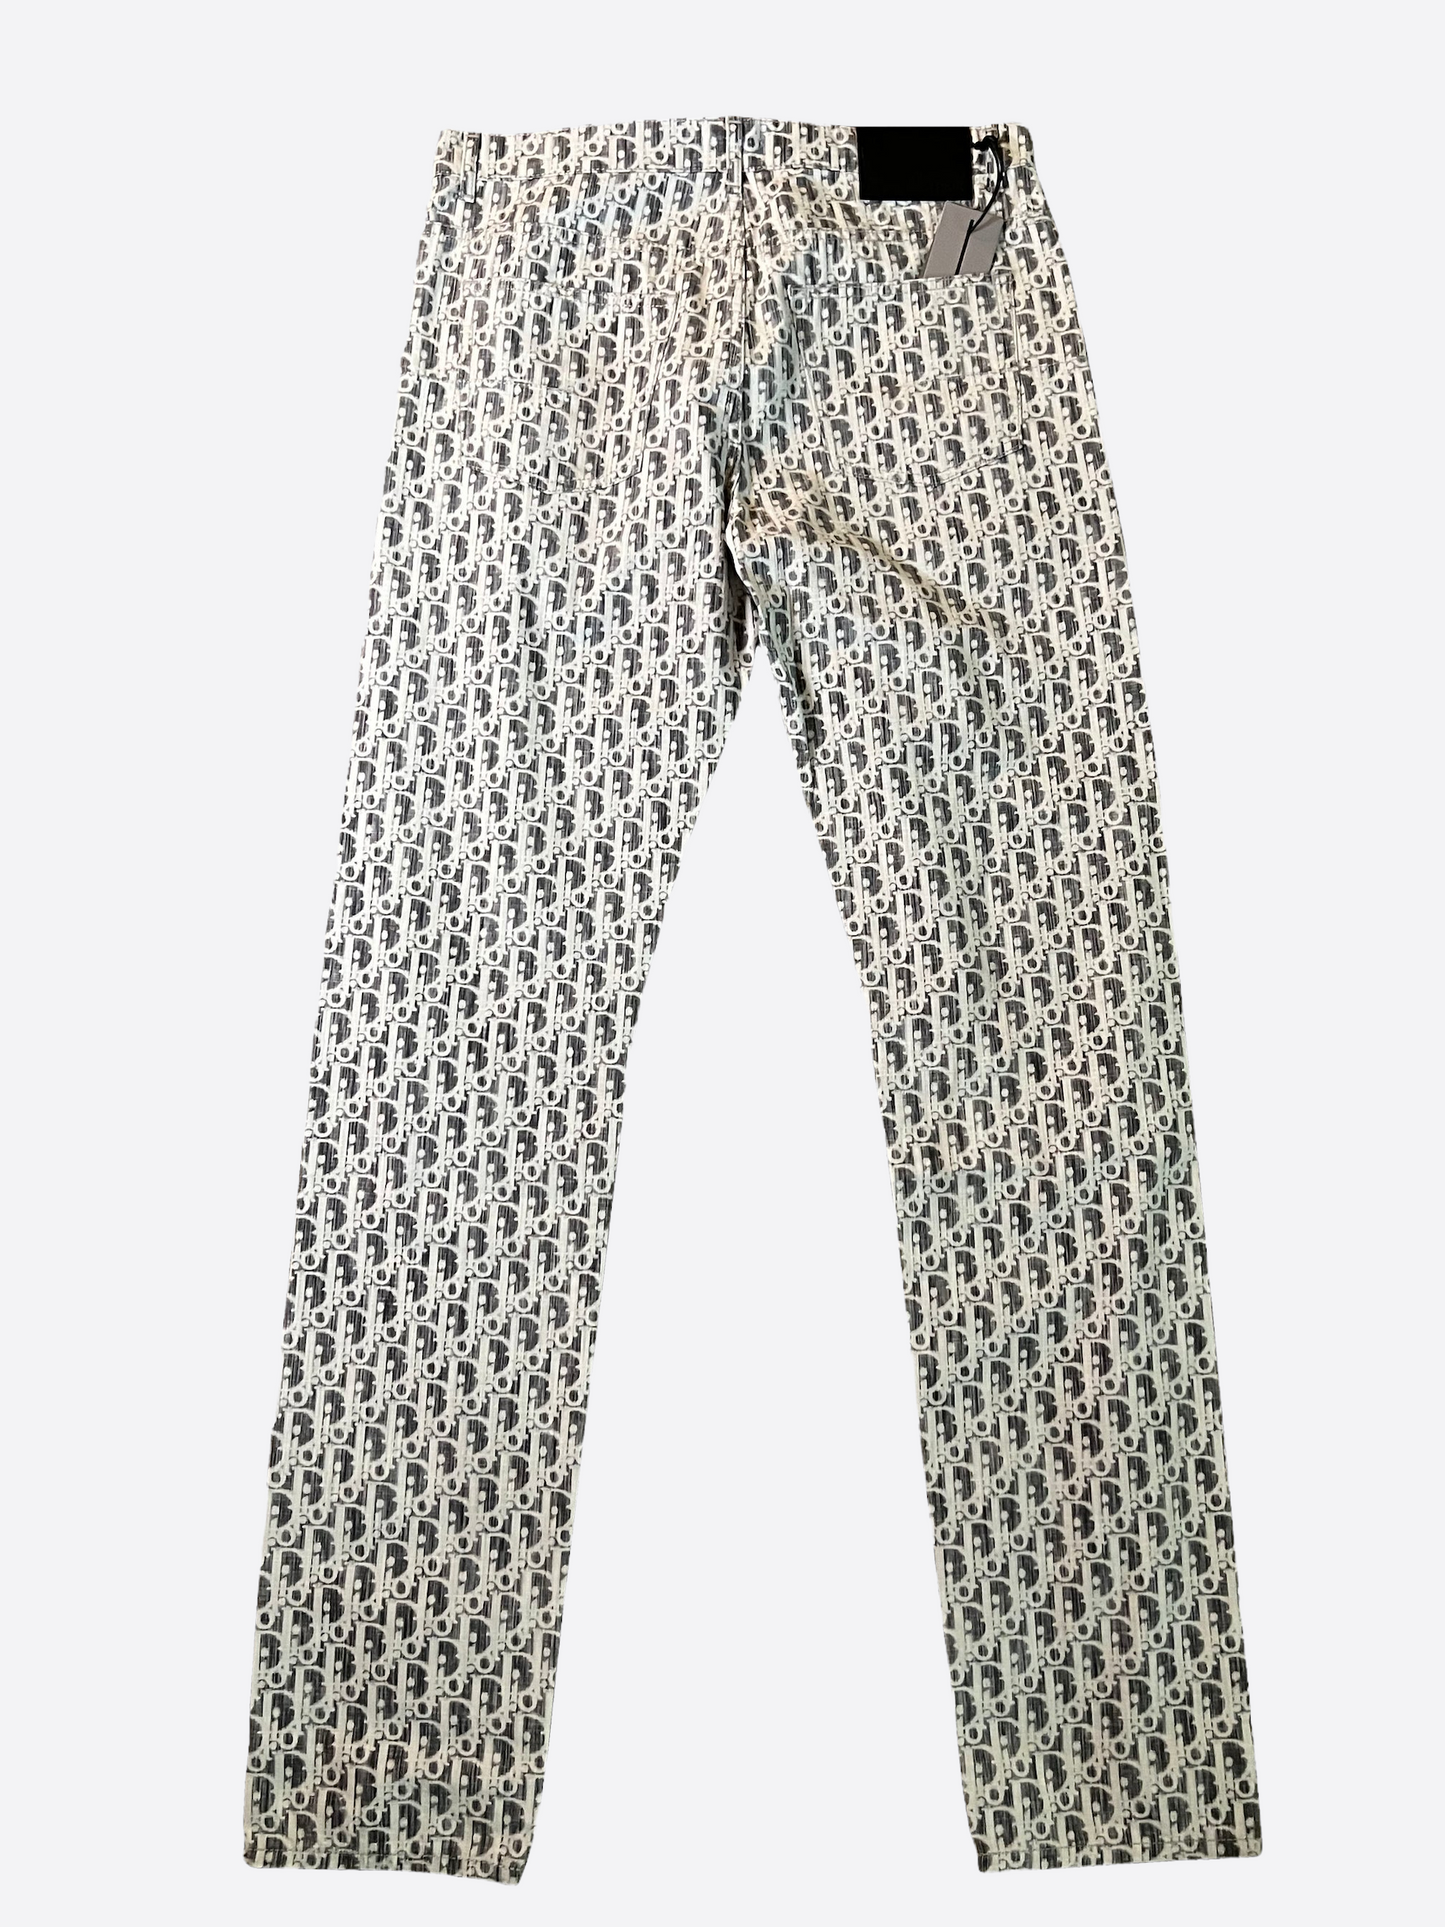 Dior Oblique Monogram Jeans